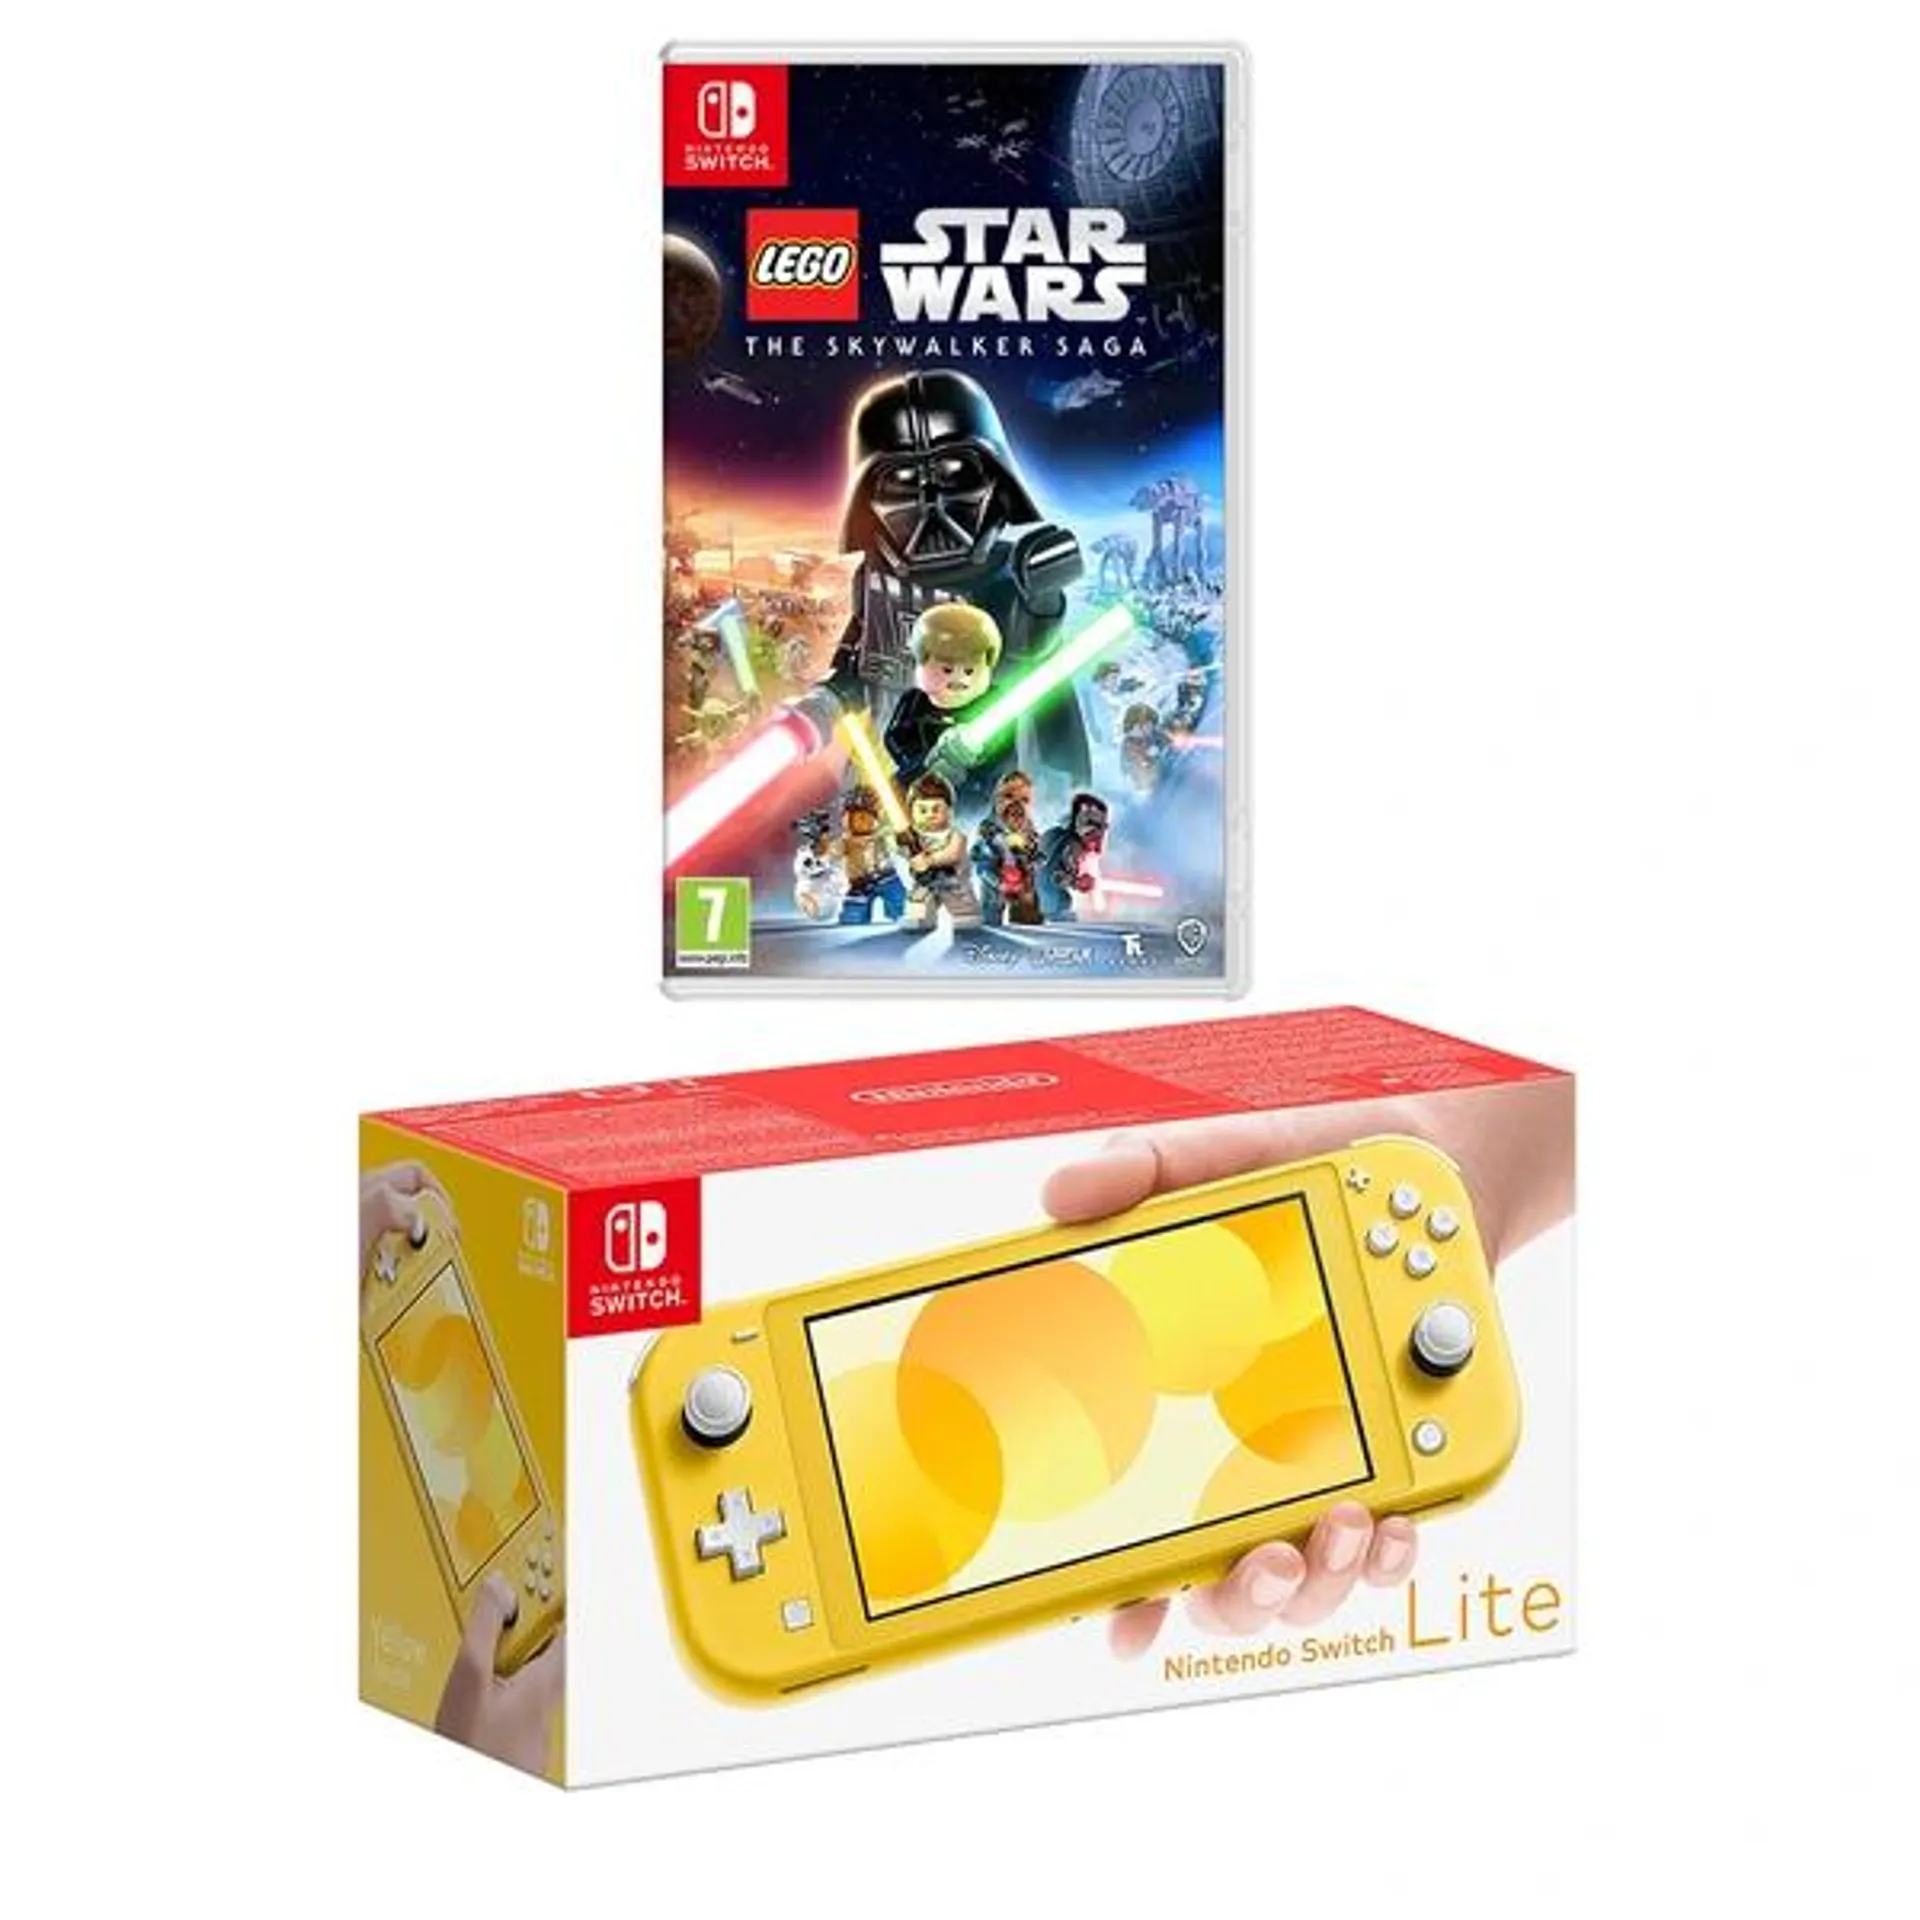 Nintendo Switch Lite (Yellow) & LEGO Star Wars: The Skywalker Saga